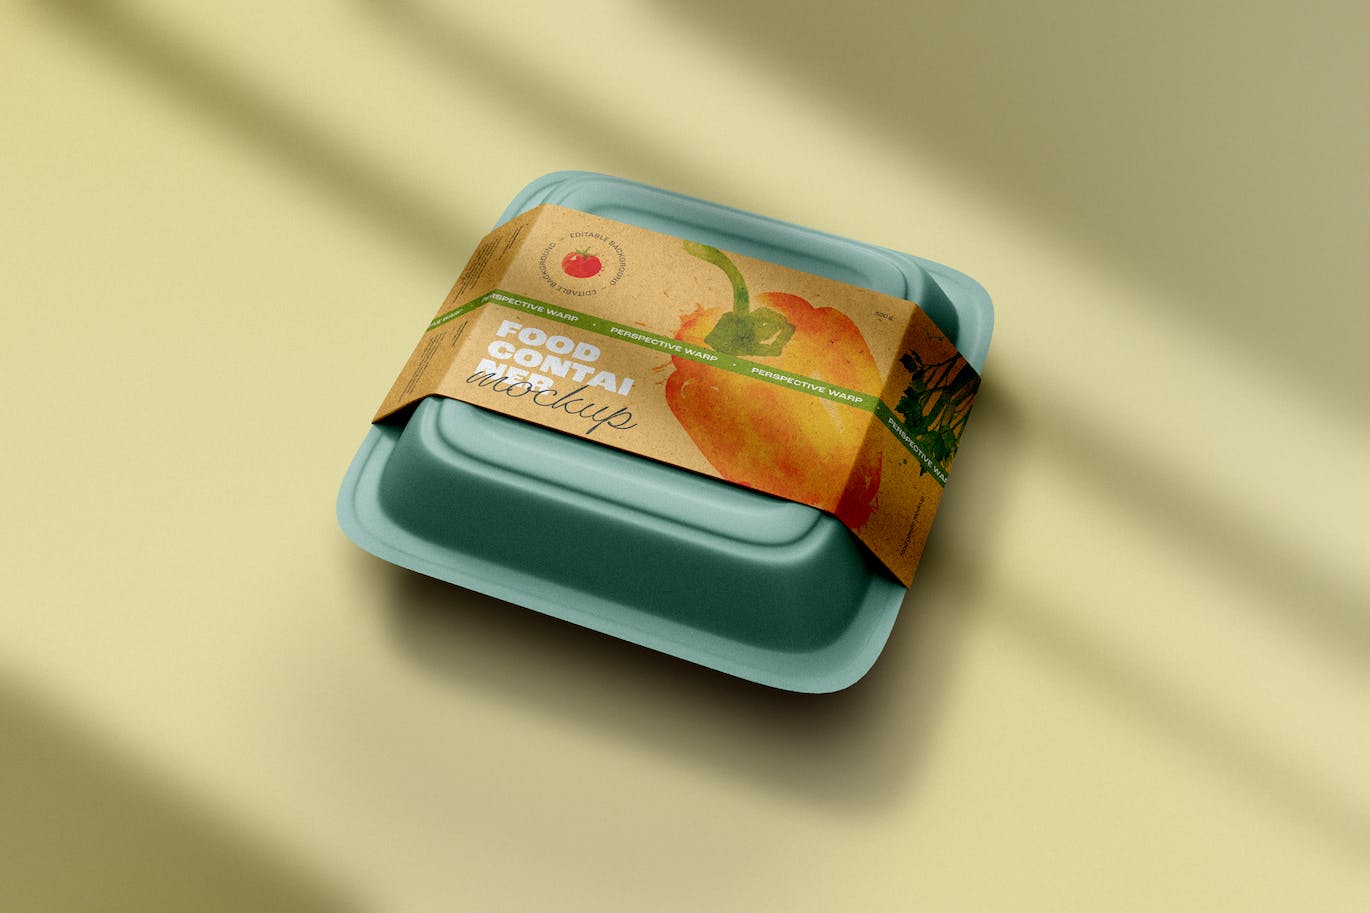 塑料外卖容器包装设计样机 Plastic Food Container Mockup 样机素材 第1张